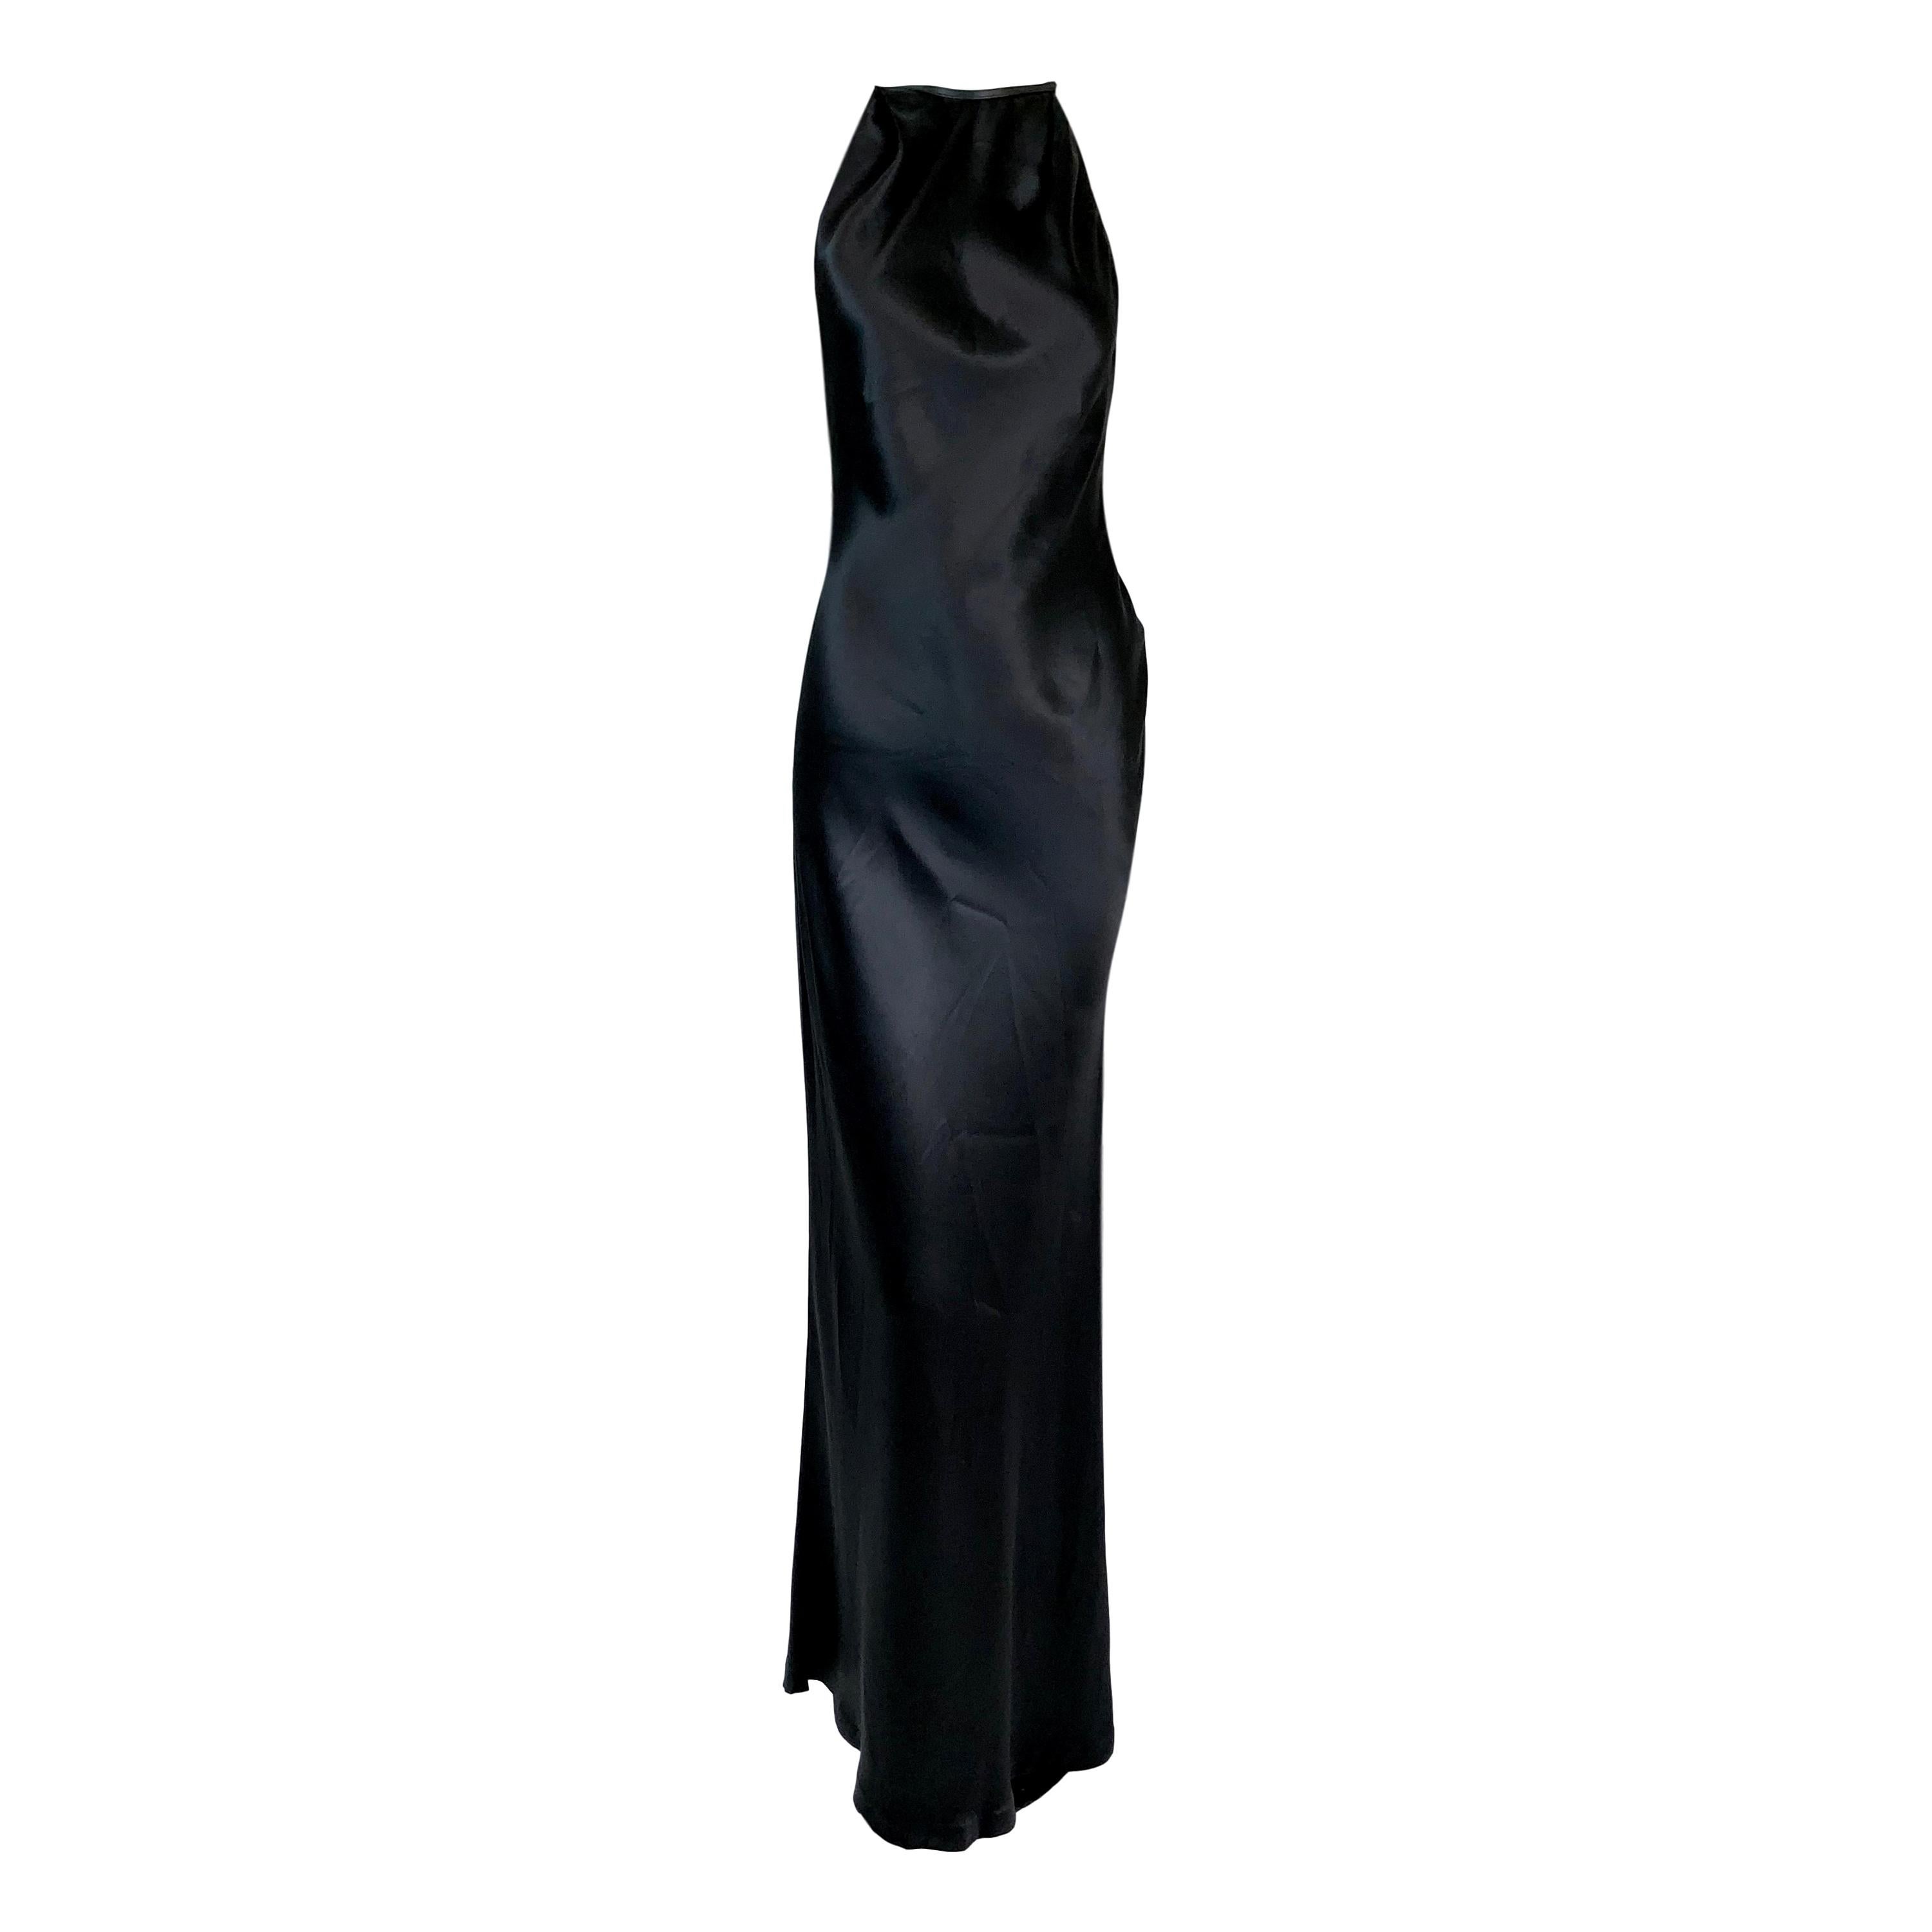 1999 Gucci Tom Ford Black Satin High Neck Choker Asymmetrical Gown Dress